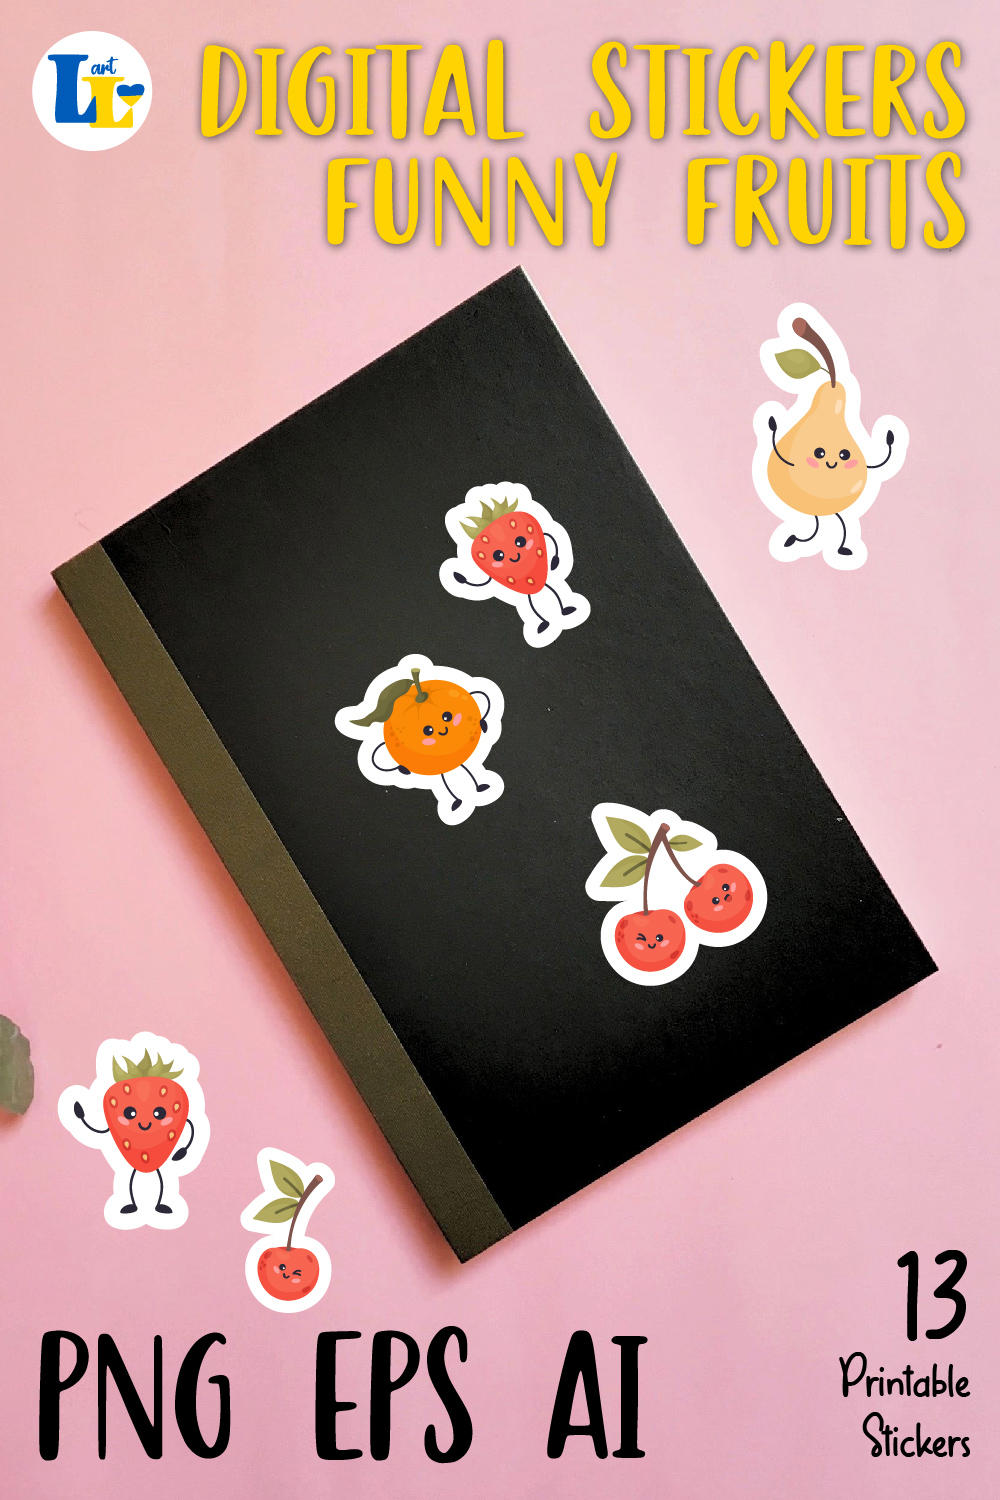 Cute fruit kawaii characters stickers bundle | 13 Printable digital sticker pinterest preview image.